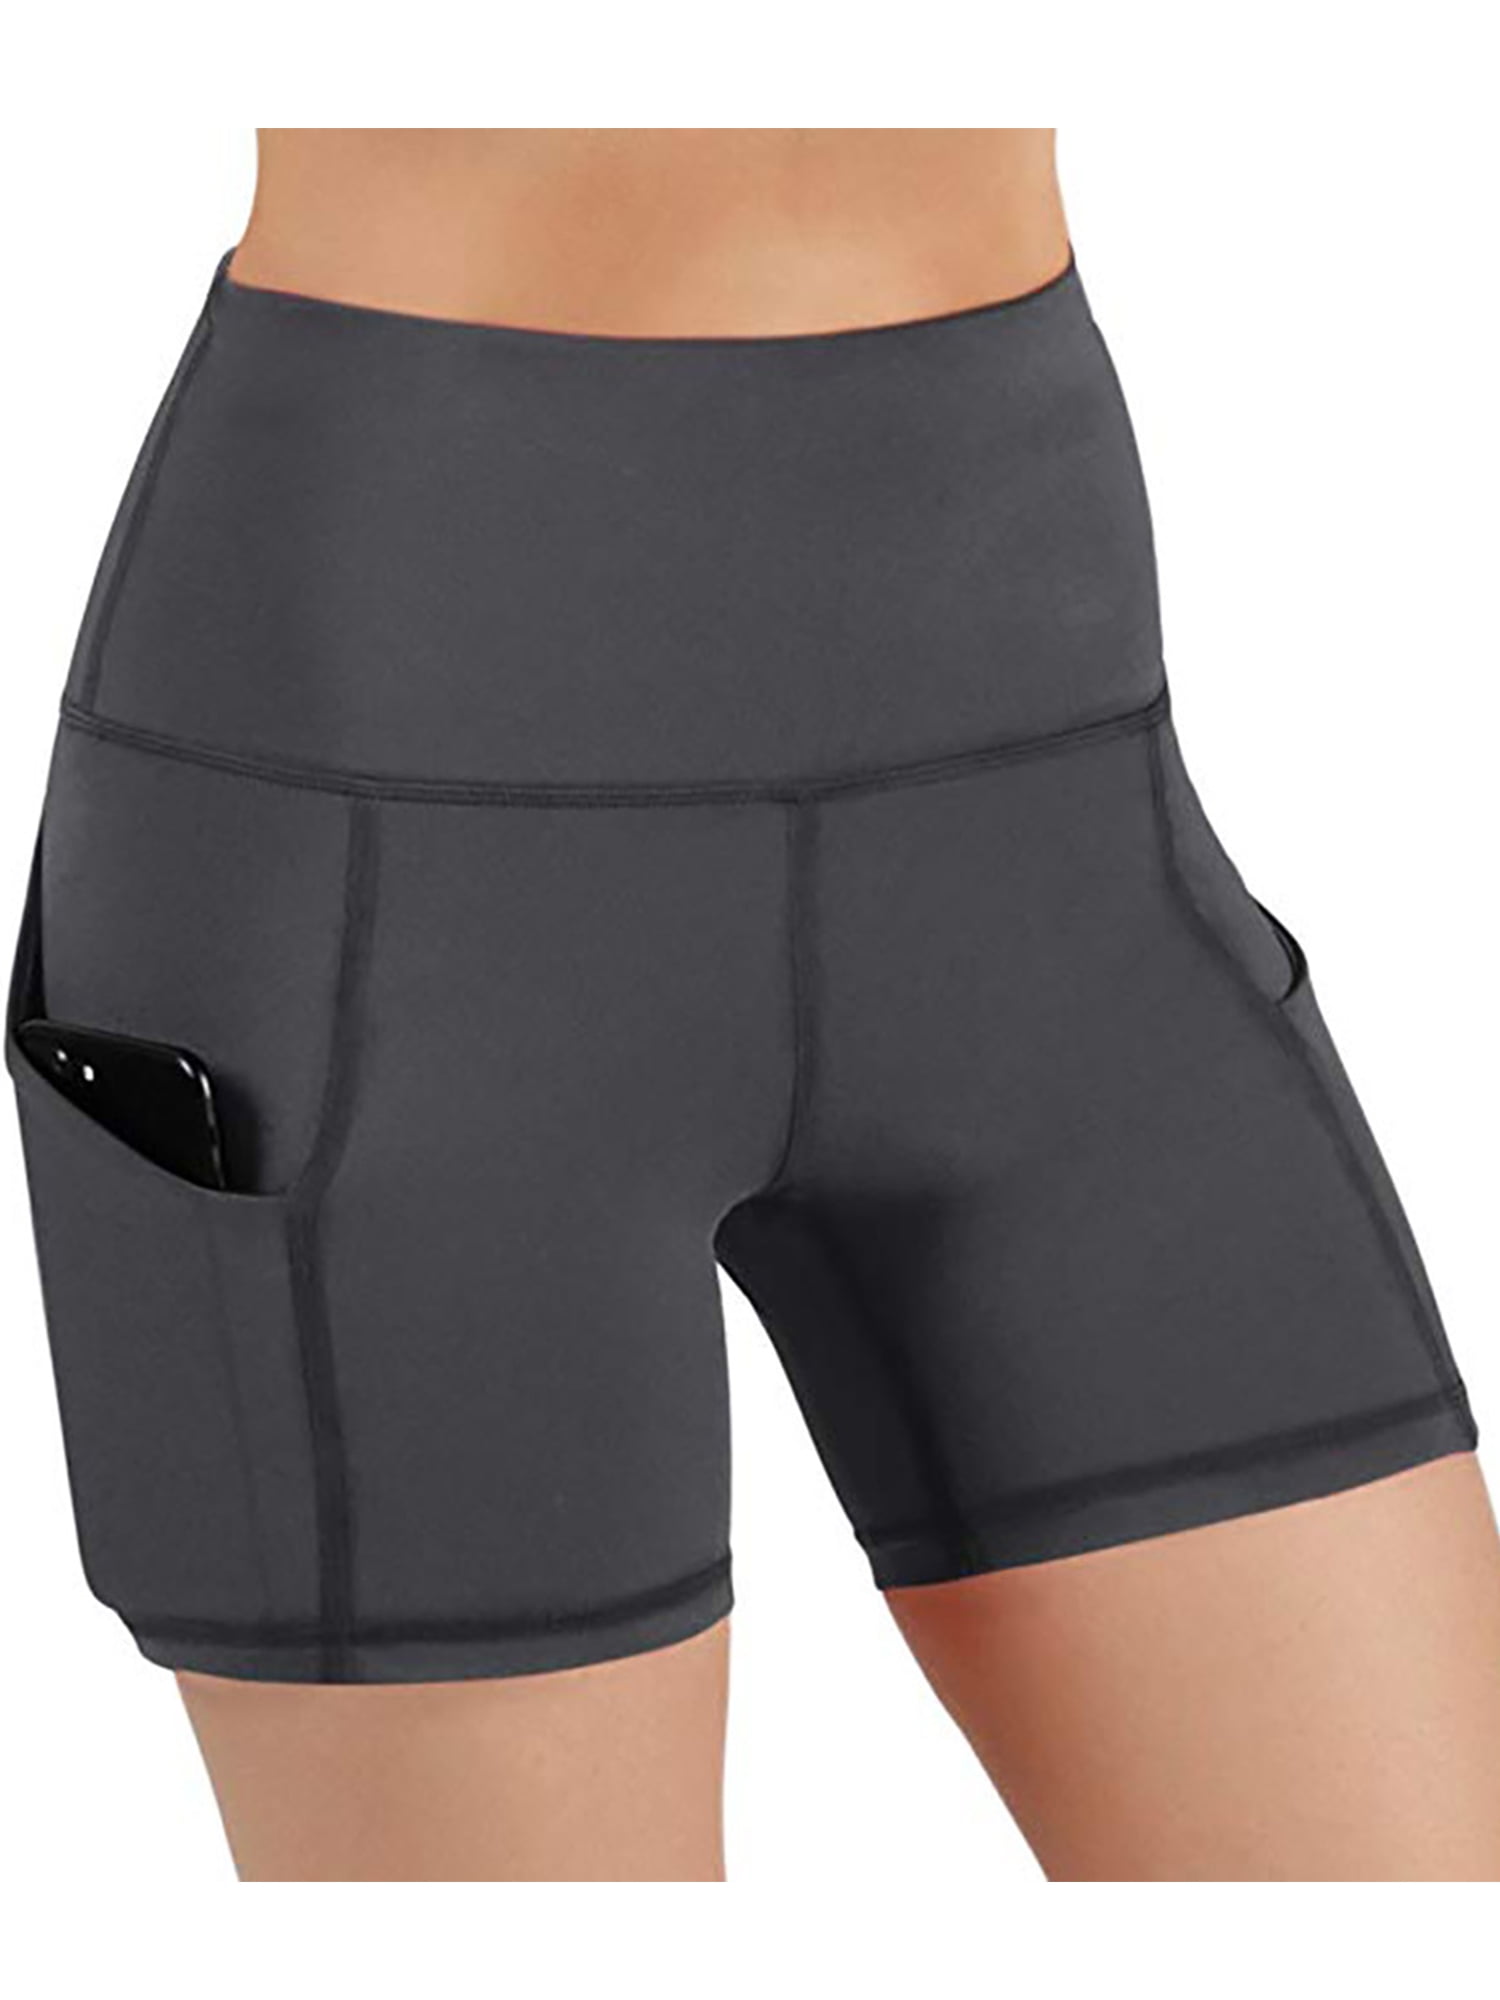 Hessimy High Waist Workout 3-Stripe Shorts,Tummy Control Yoga Gym Running Shorts,Non See-Through Yoga Shorts 